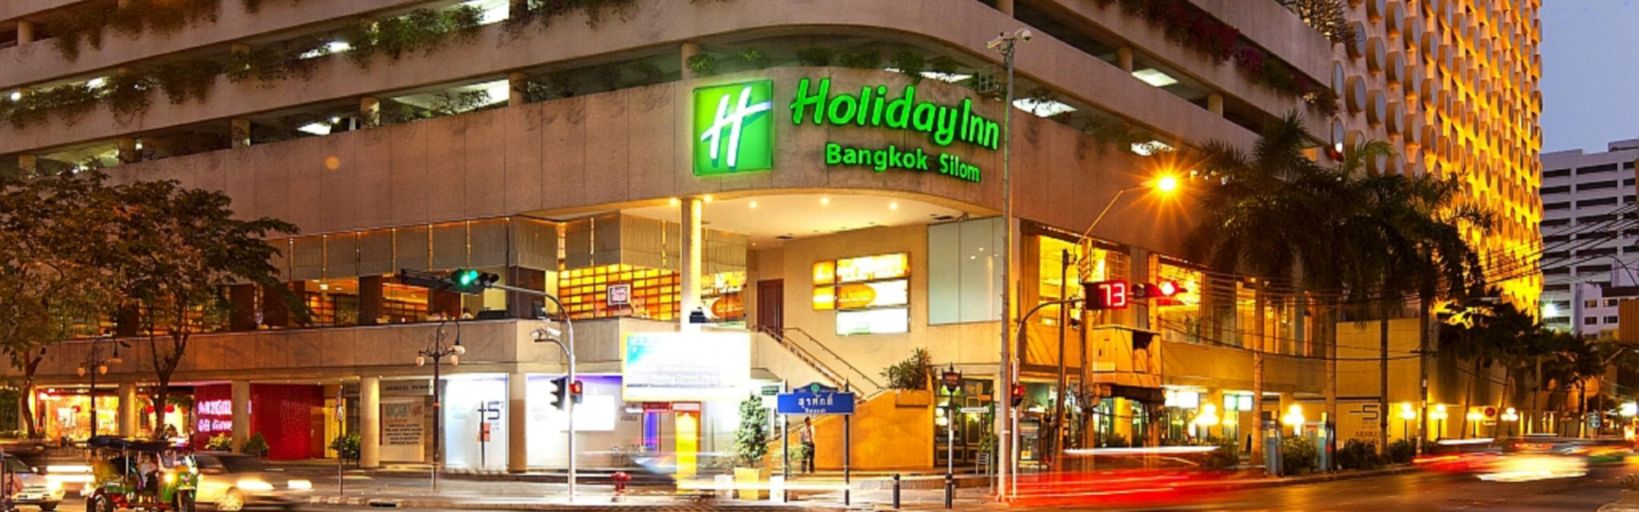 Holiday Inn Bangkok Silom Bangkok Venue Eventopedia